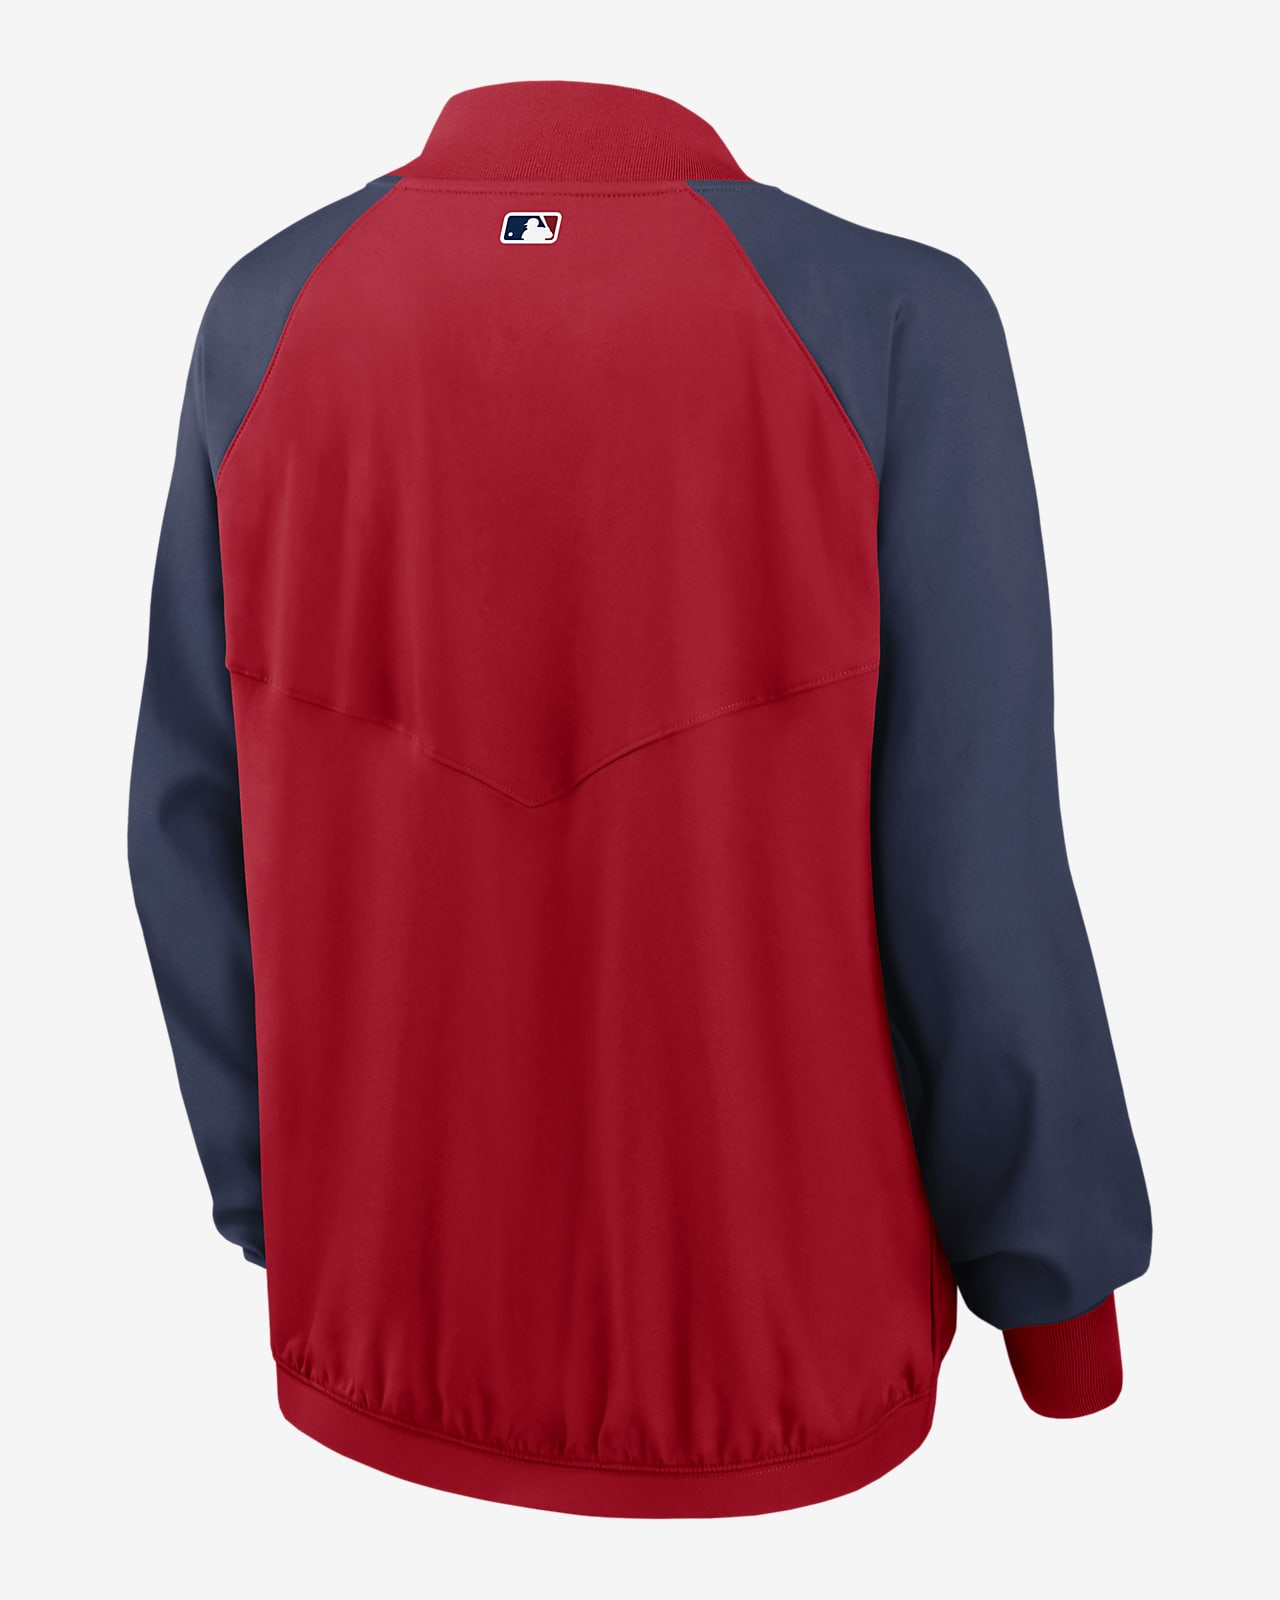 Mens S St Louis Cardinals Baseball Nike Dri-Fit T-Shirt Navy Blue MLB S/S